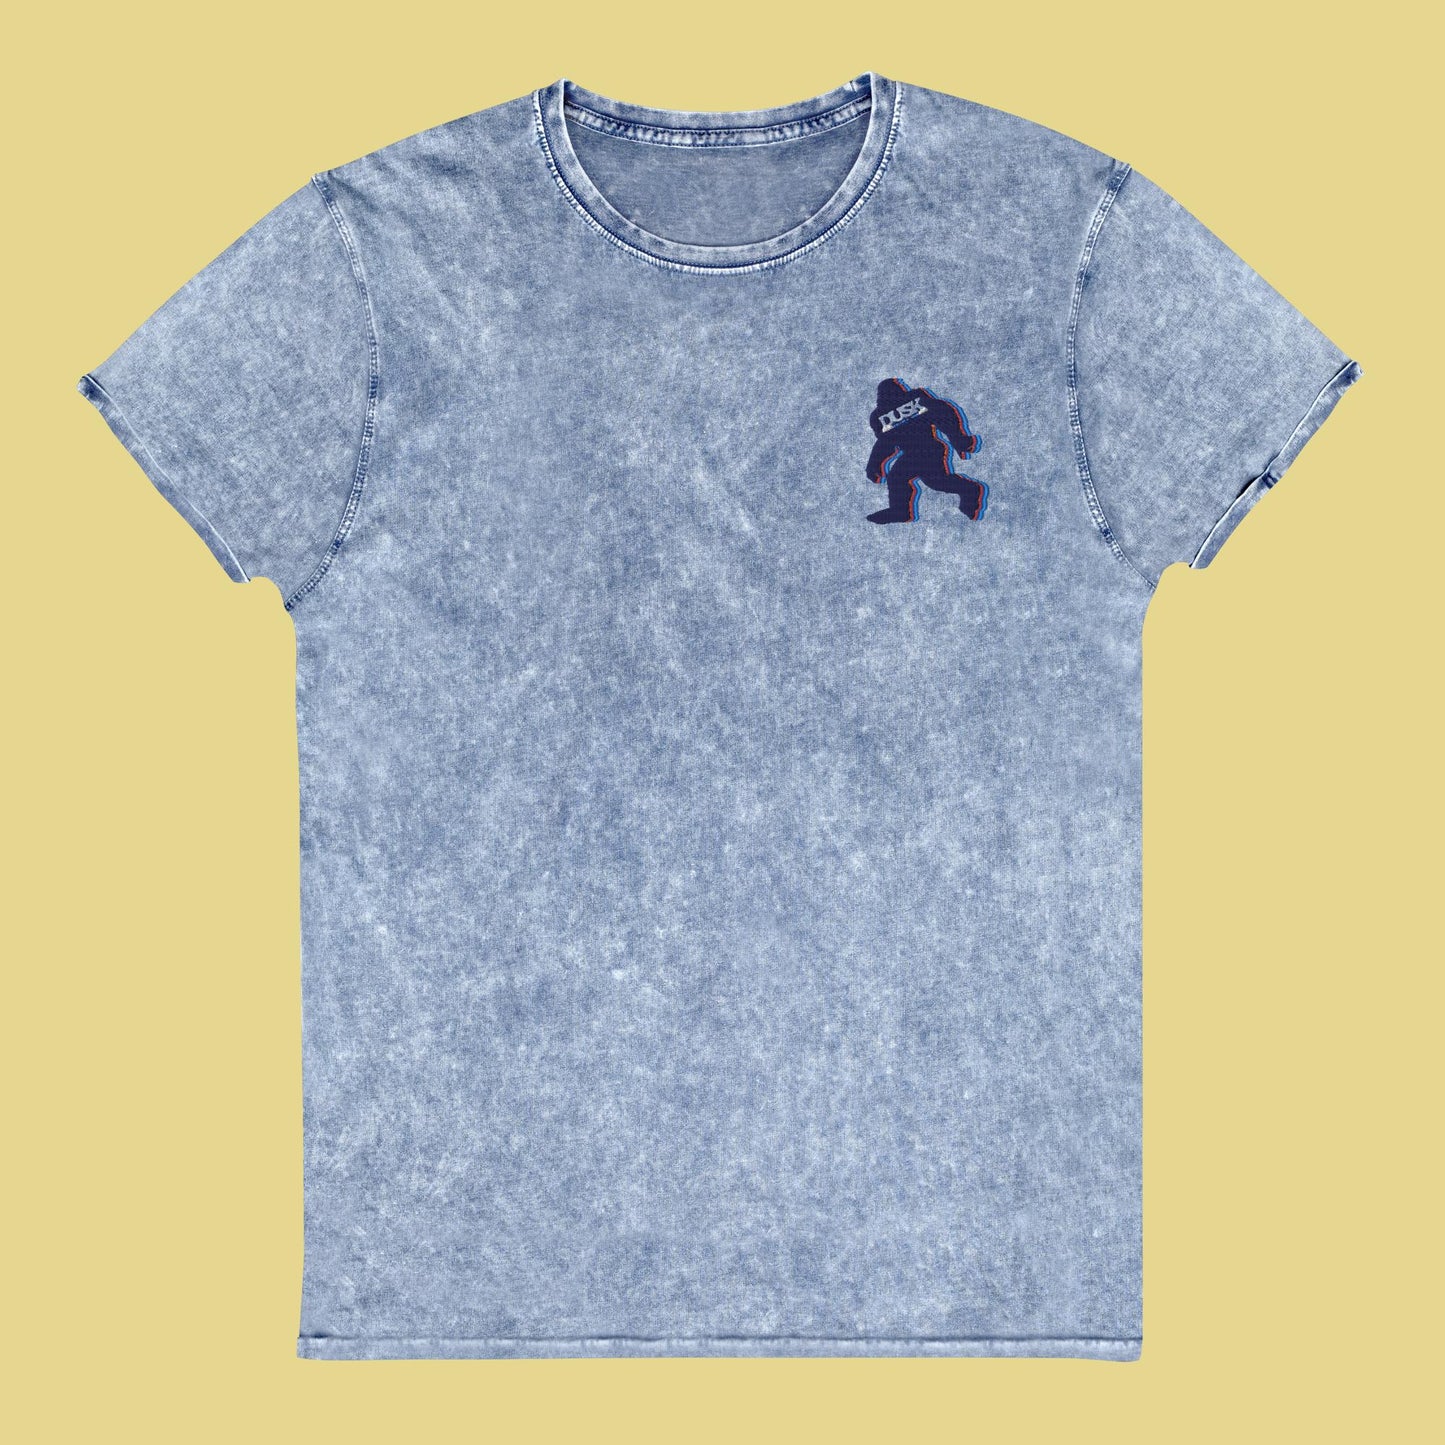 Notorious B.I.G.foot - Unisex Denim T-Shirt